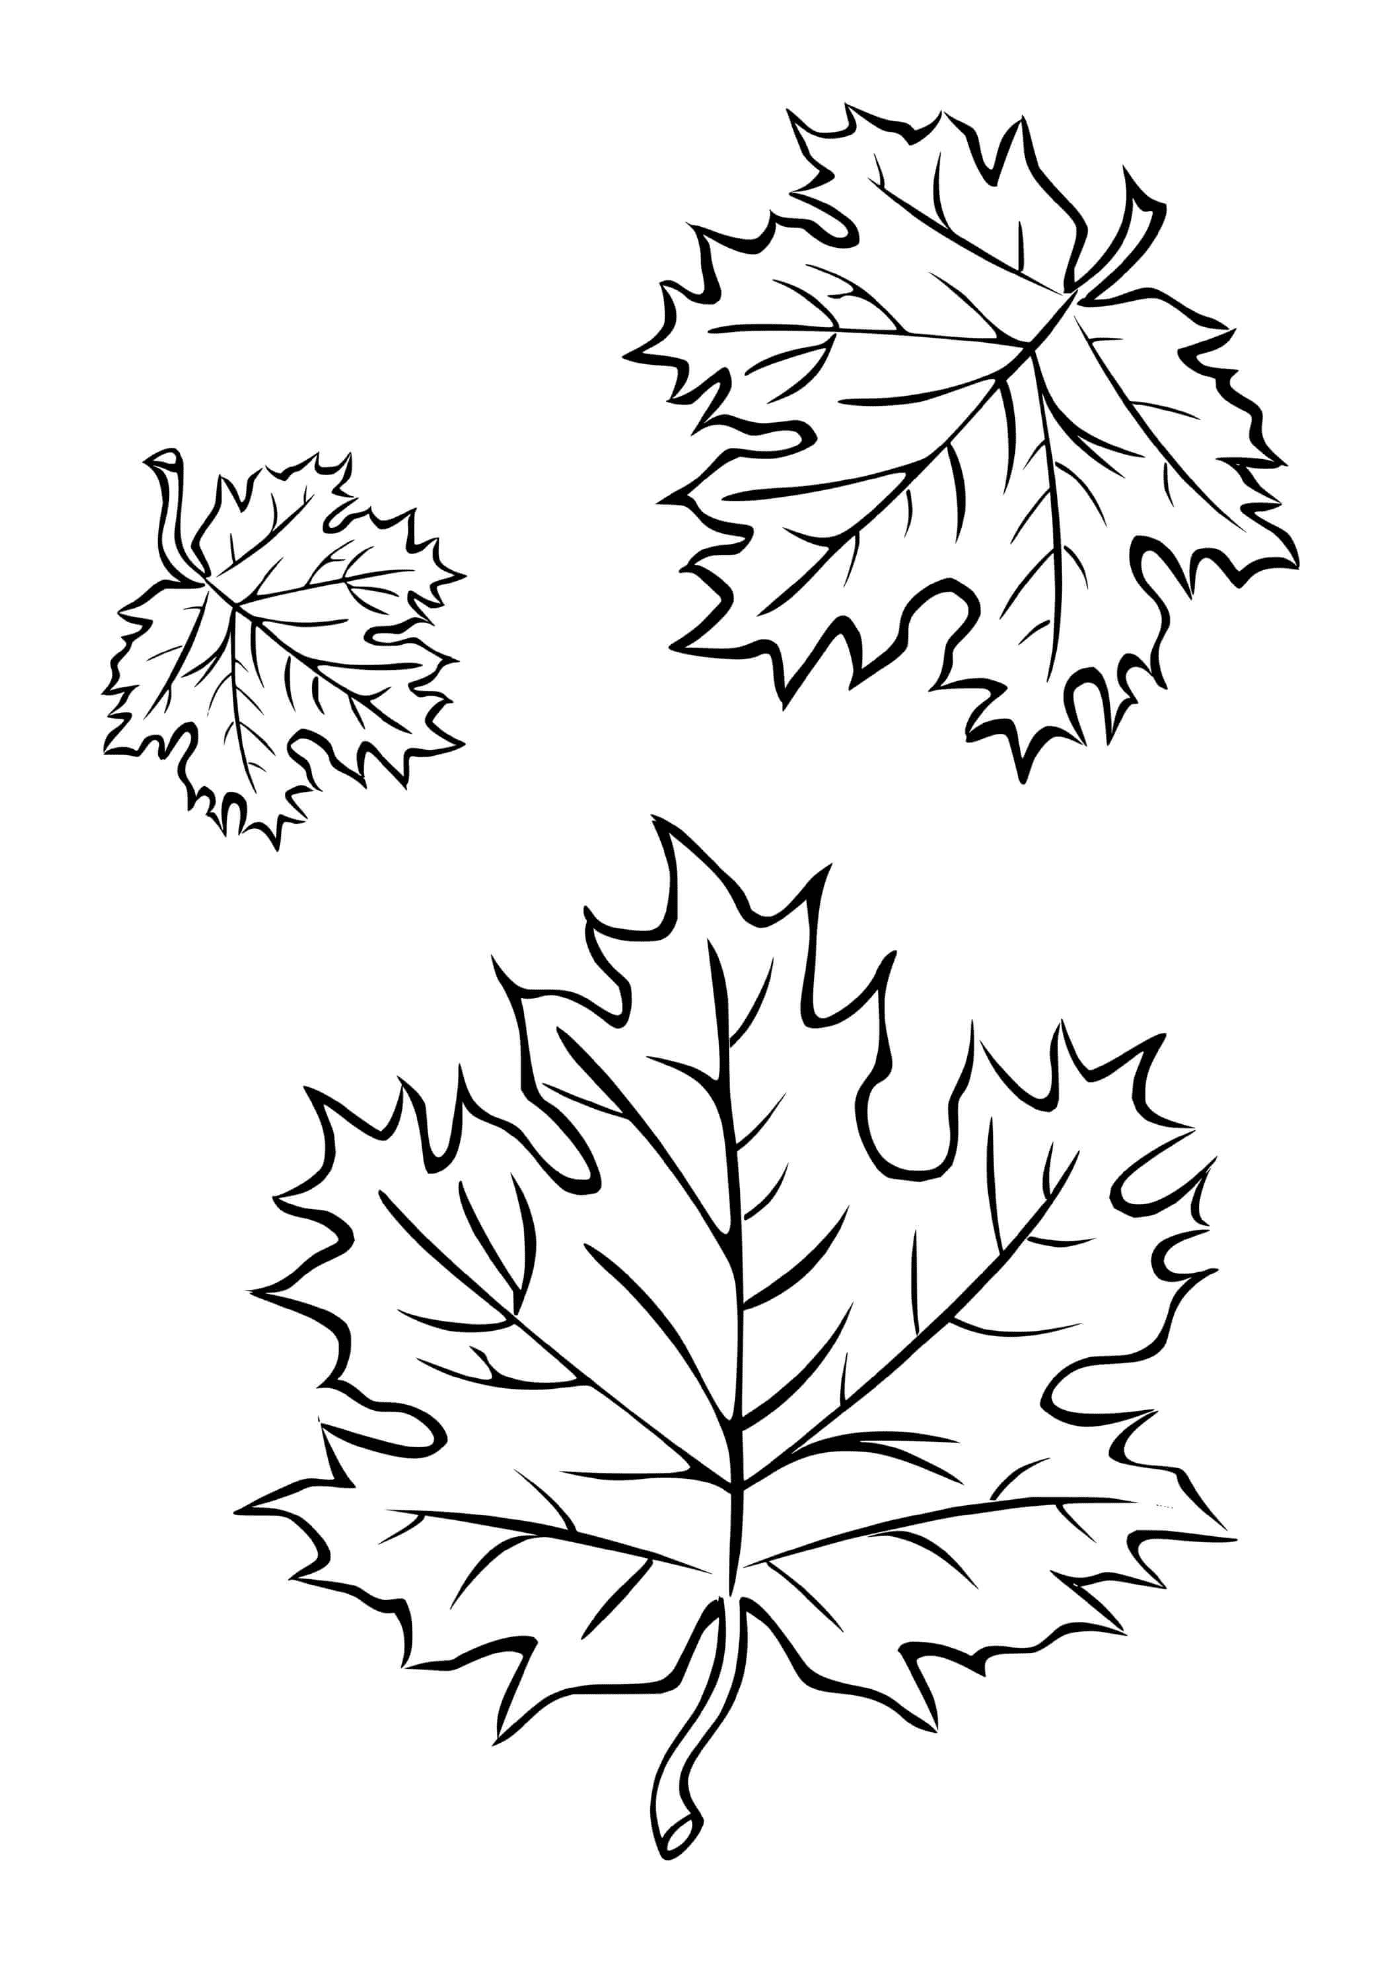  Tre foglie autunnali 